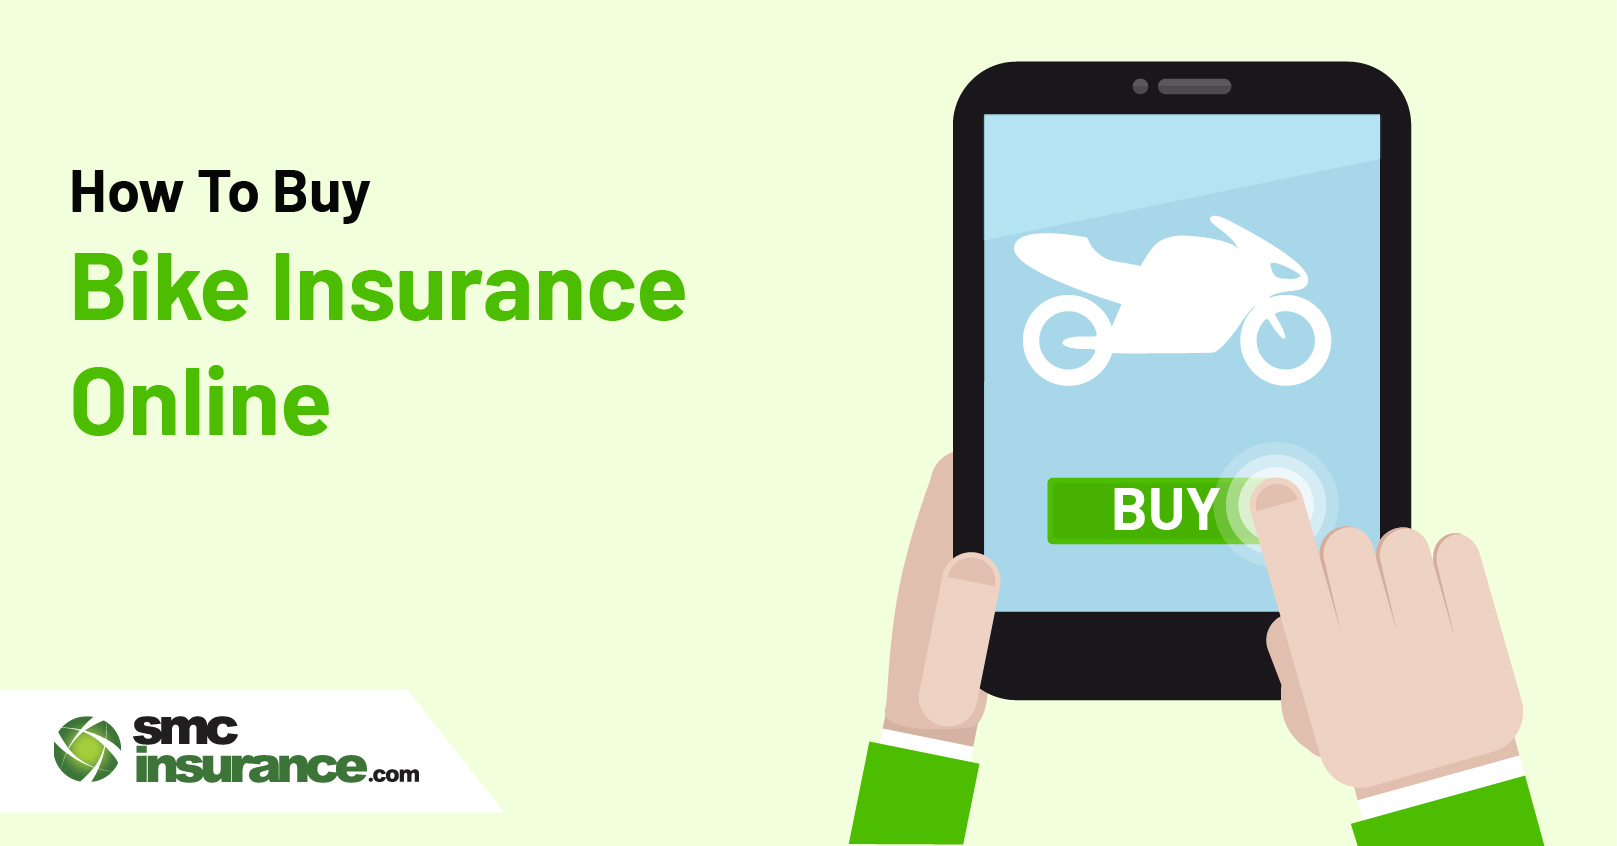 How To Buy Bike Insurance Online?